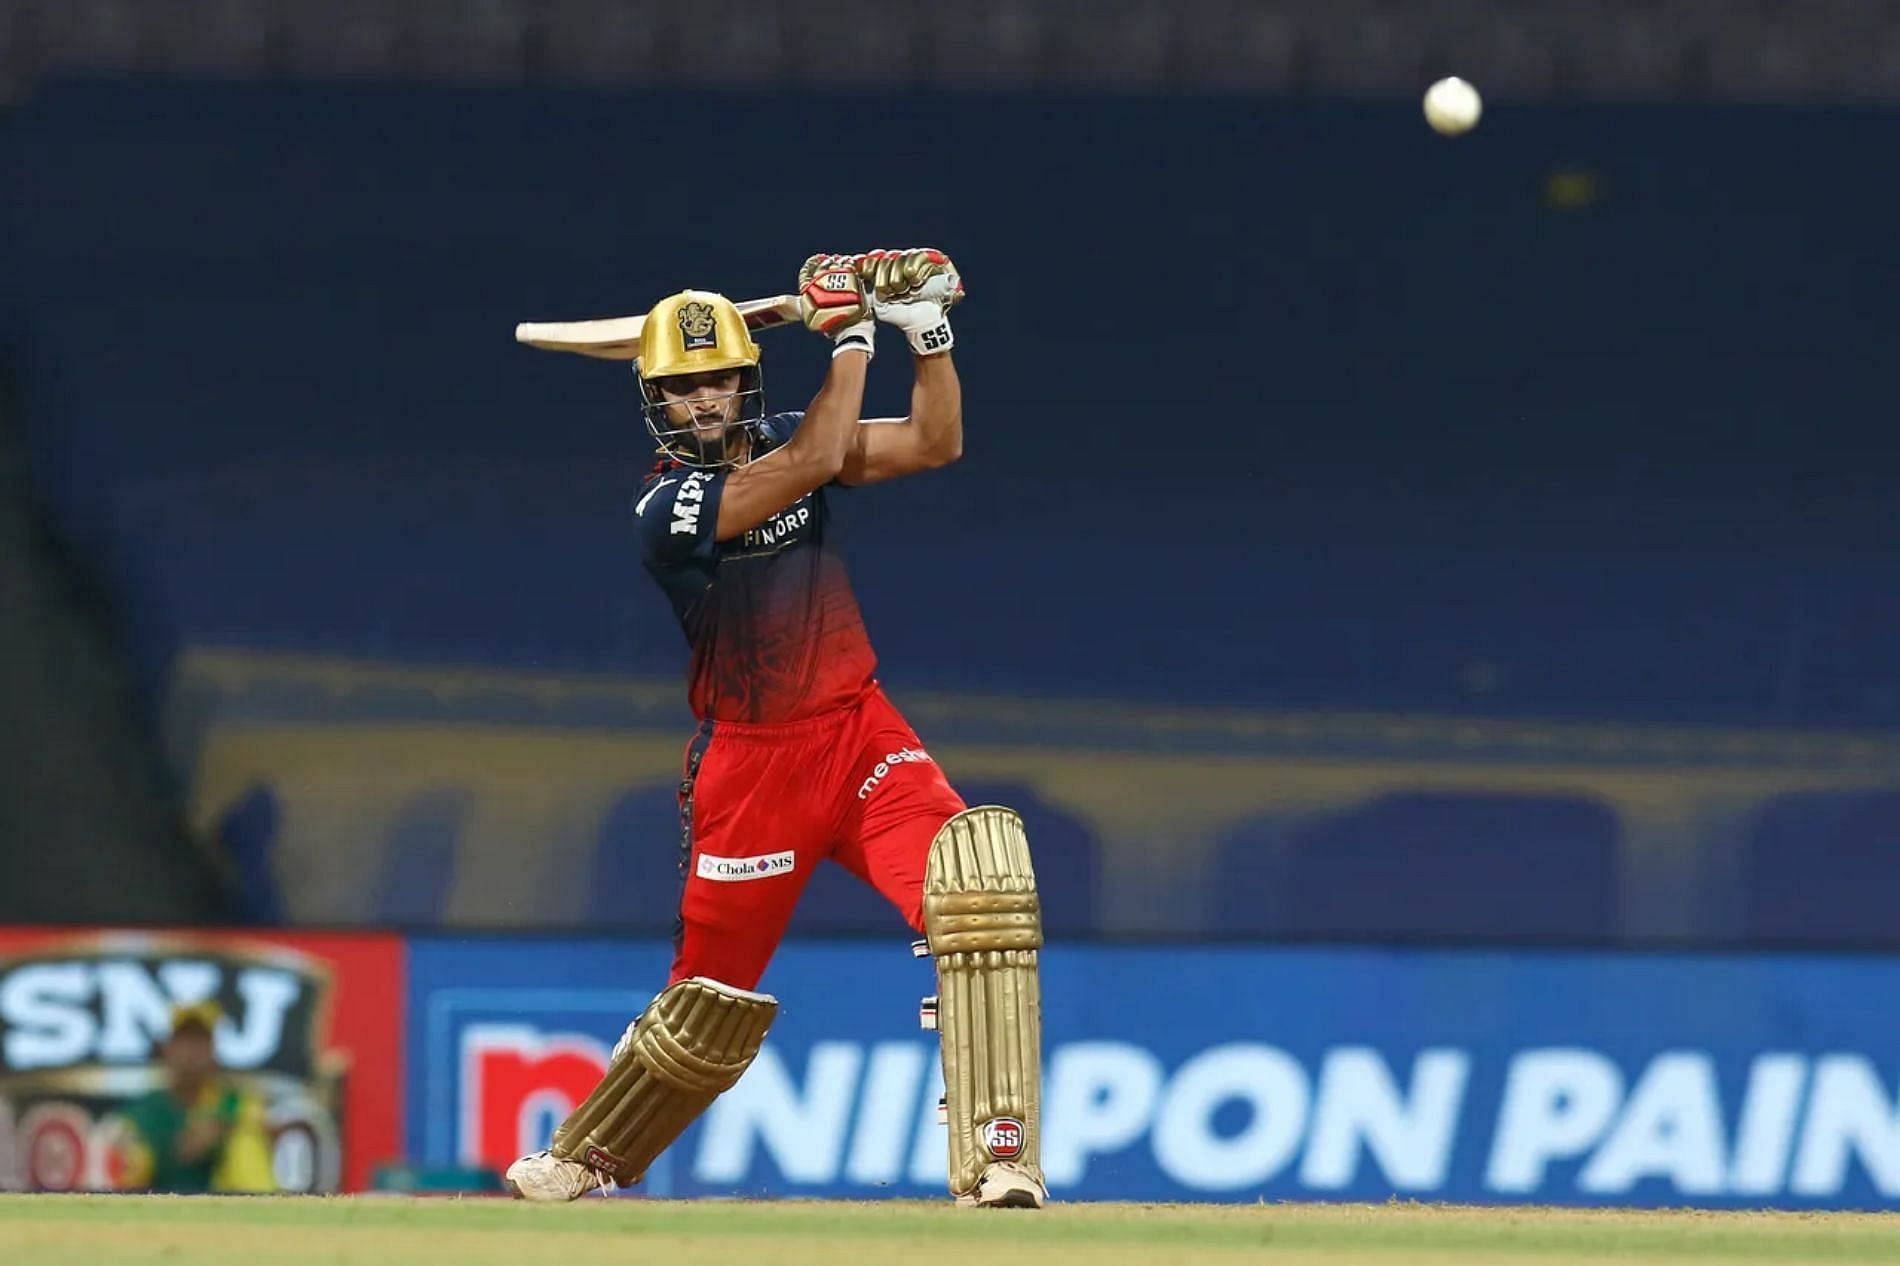 सुयश प्रभुदेसाई बल्लेबाजी के दौरान (Photo Credit - IPLT20)